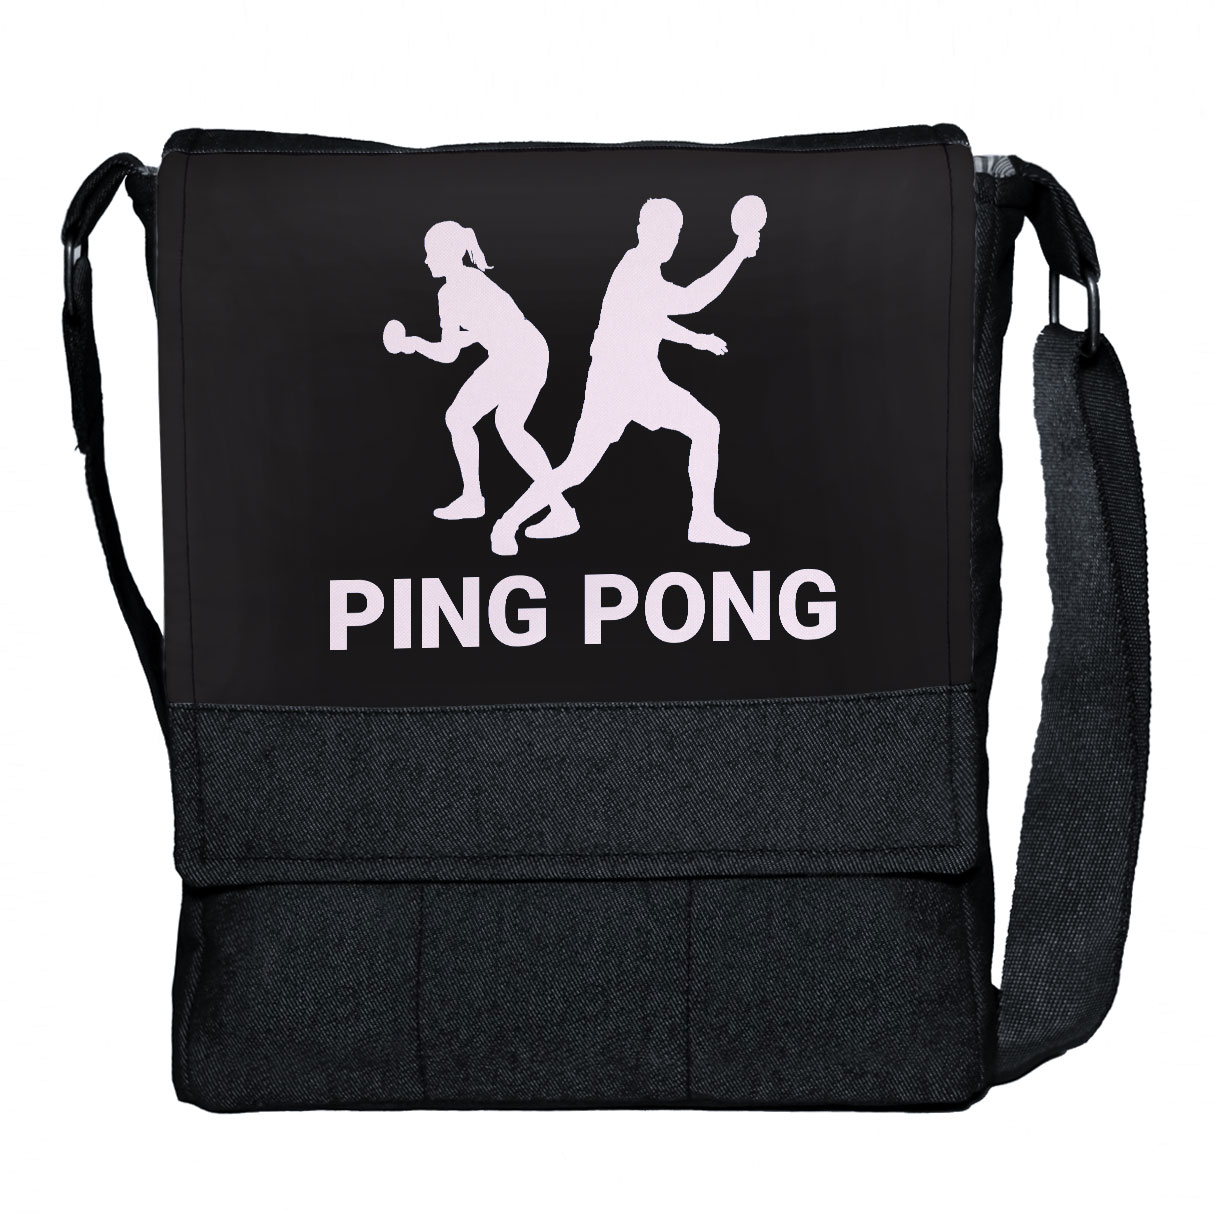 کیف رودوشی چی چاپ طرح ورزش پینگ پنگ کد Ping pong